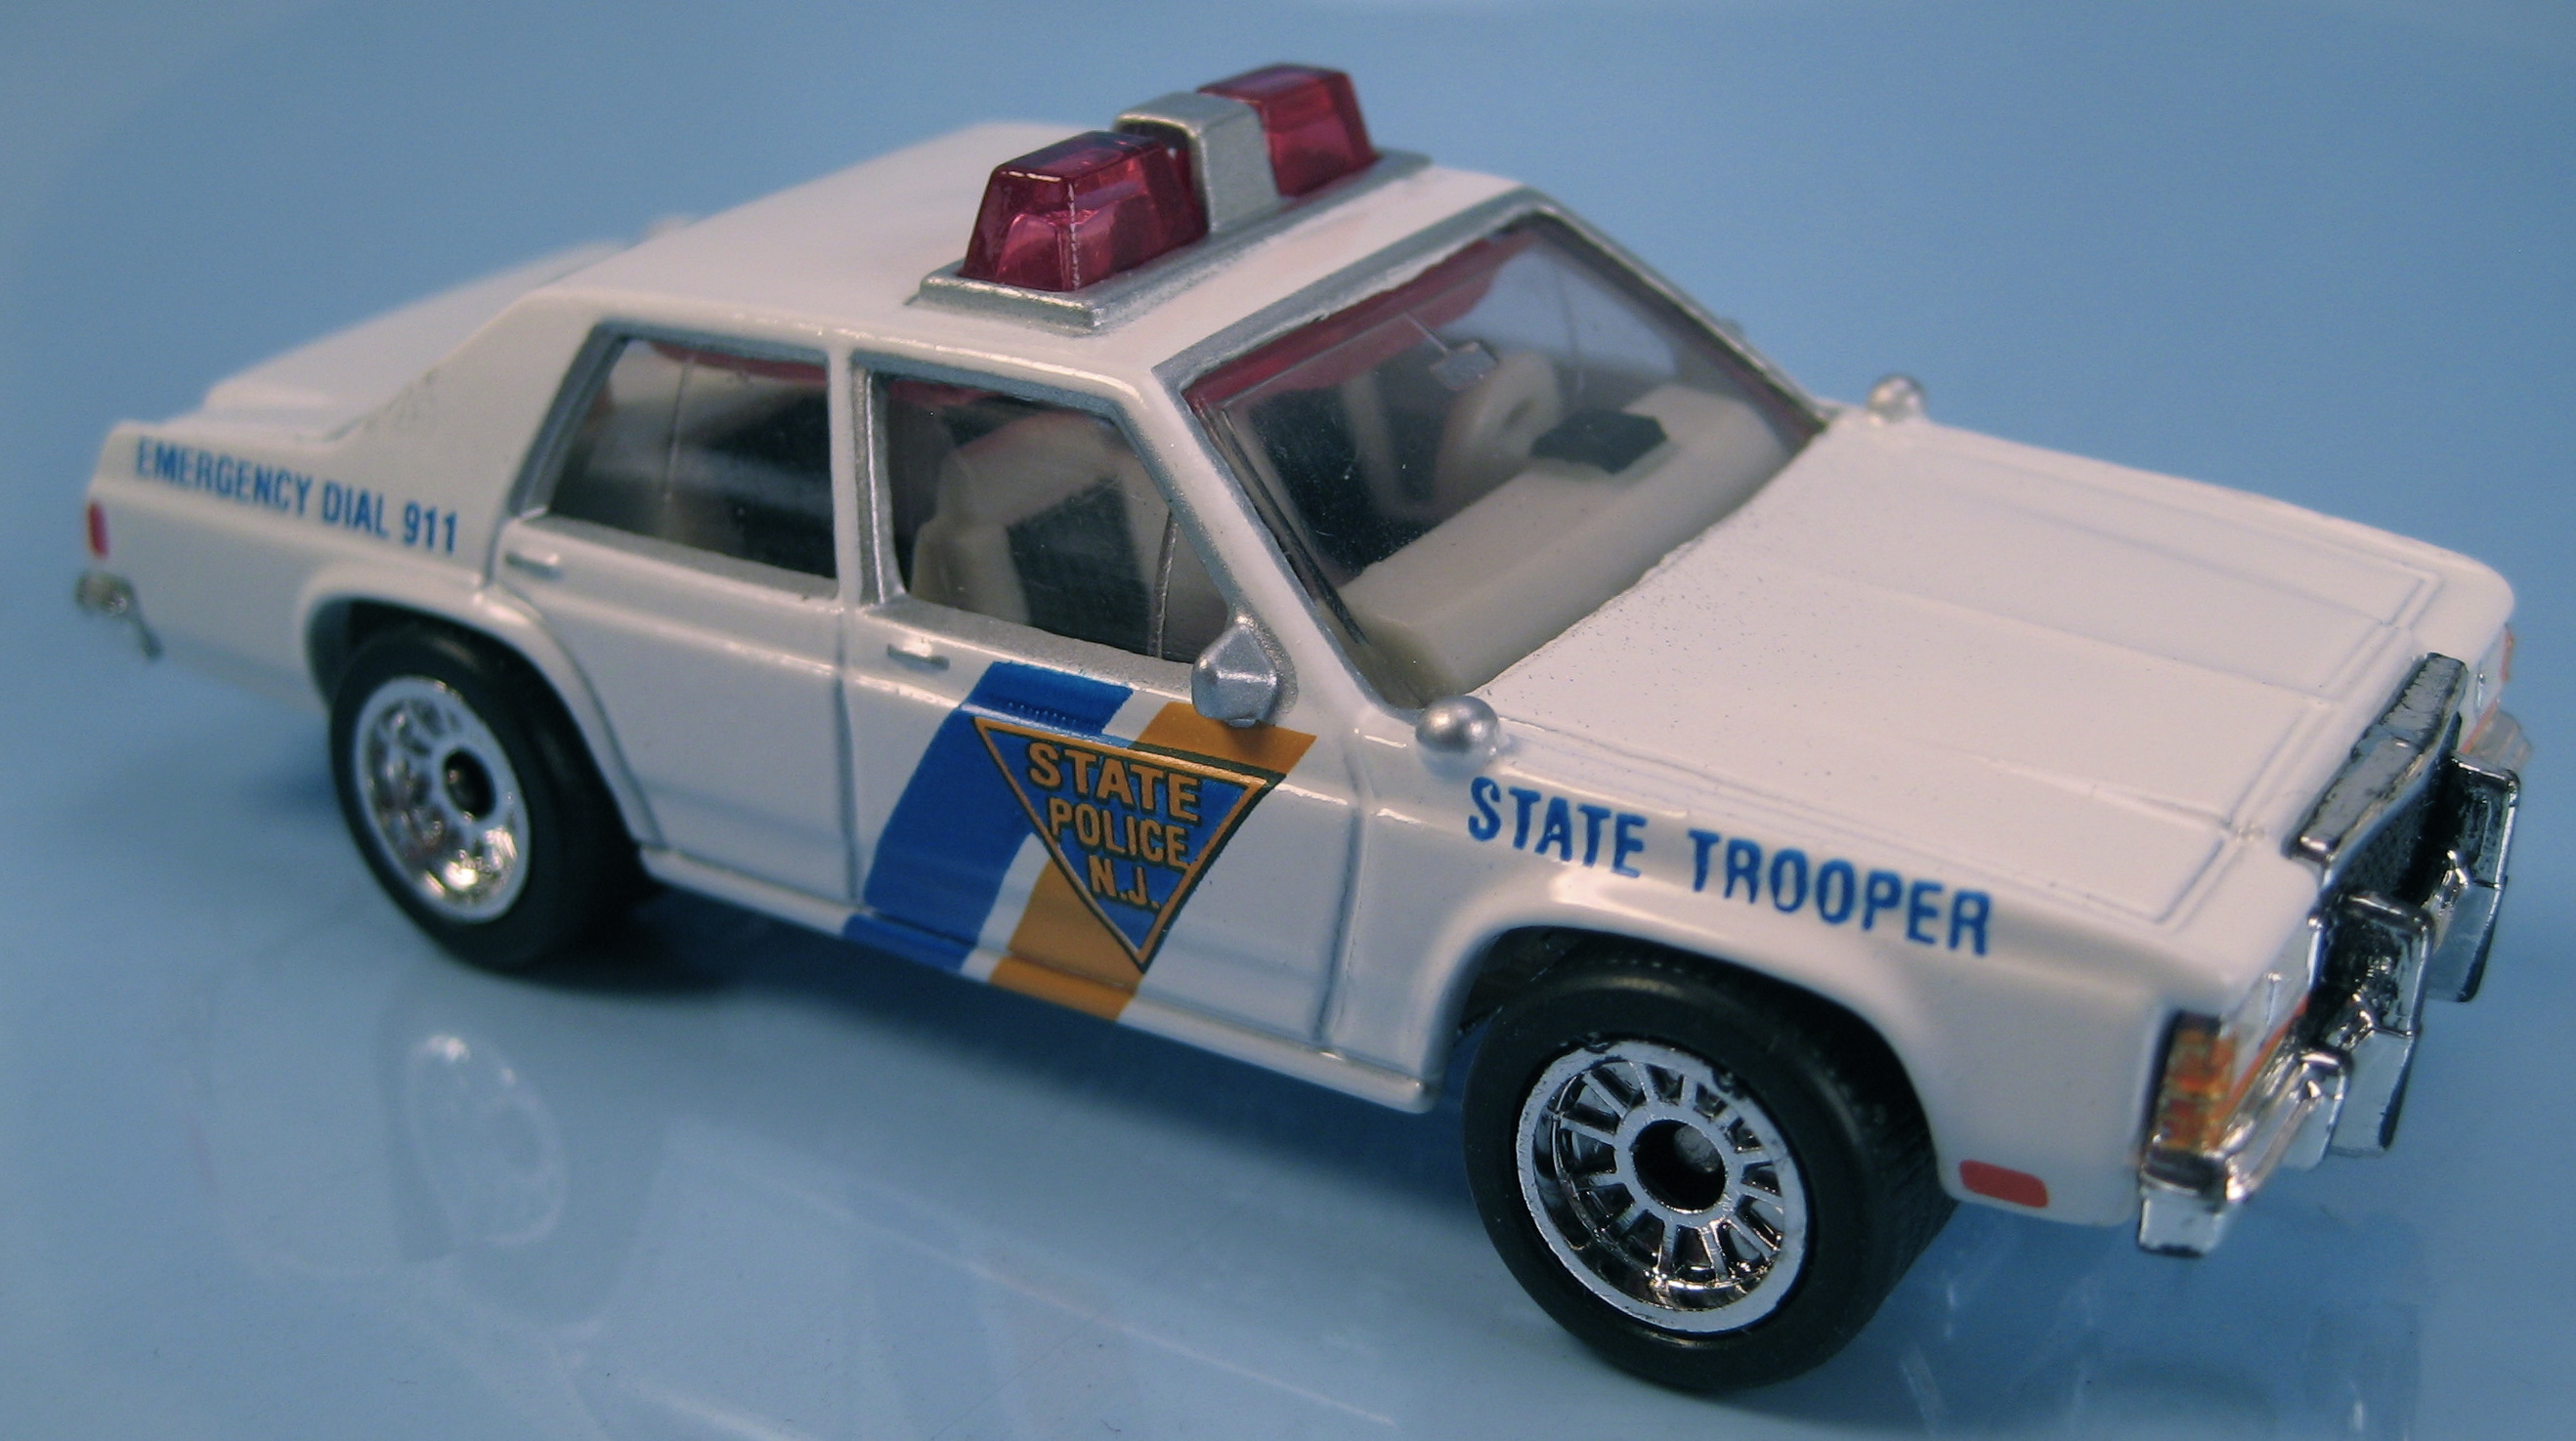 matchbox ford ltd police car